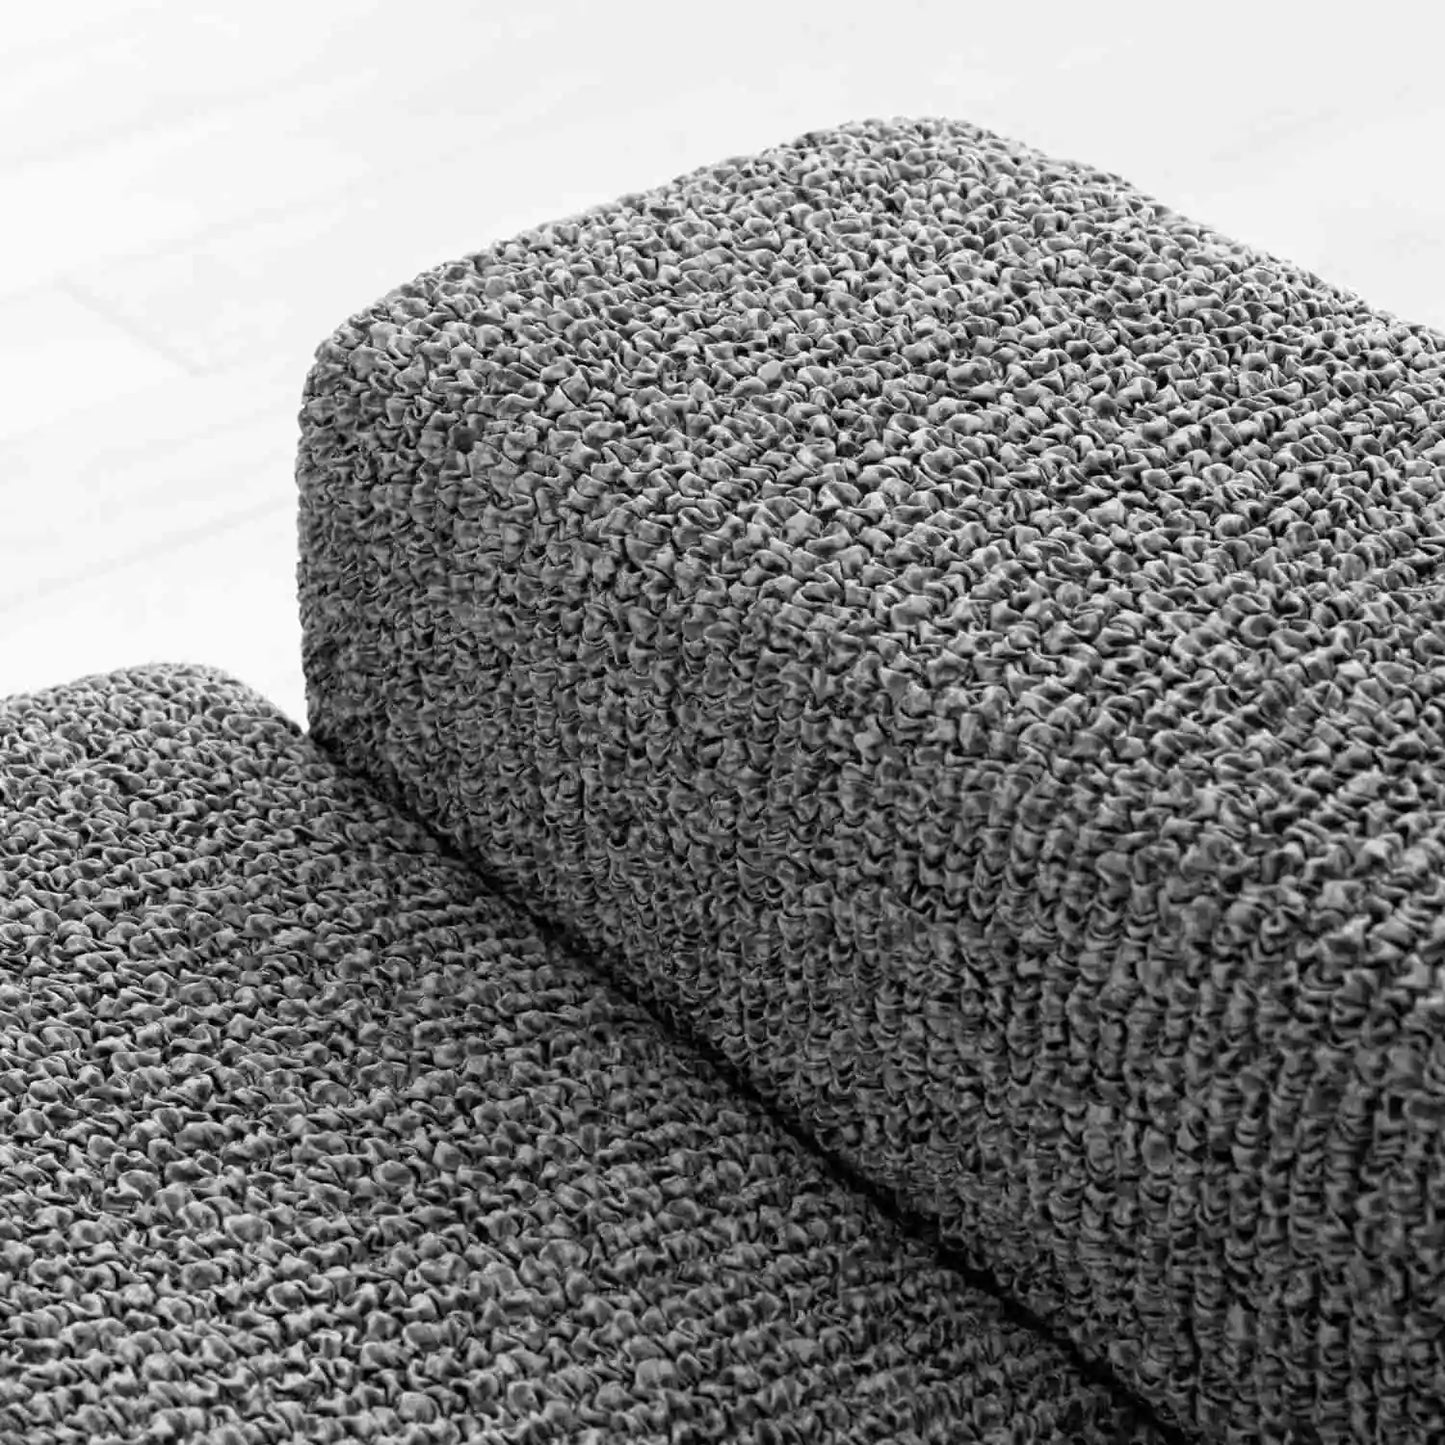 3 Seater Sofa Cover - Vittoria Grey, Microfibra Printed